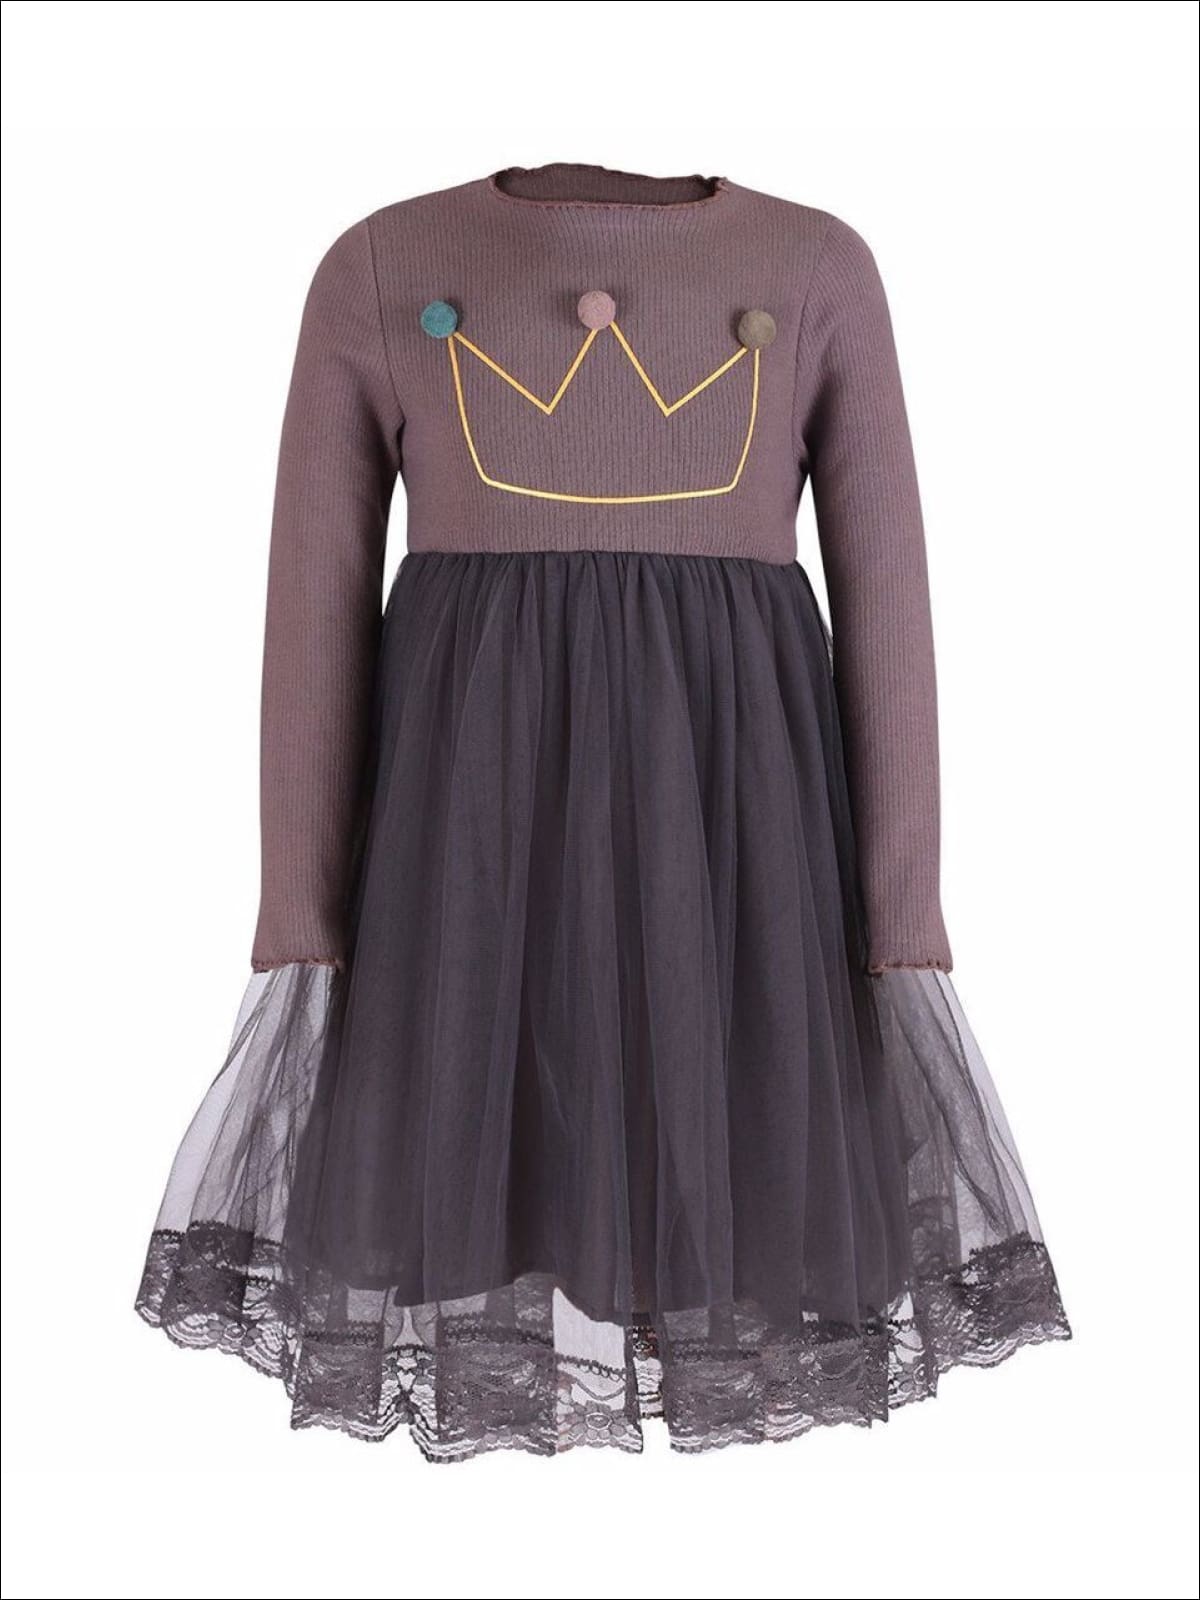 Girls Gray Pom Pom Crown Applique Lace Edge Dress - Girls Fall Casual Dress